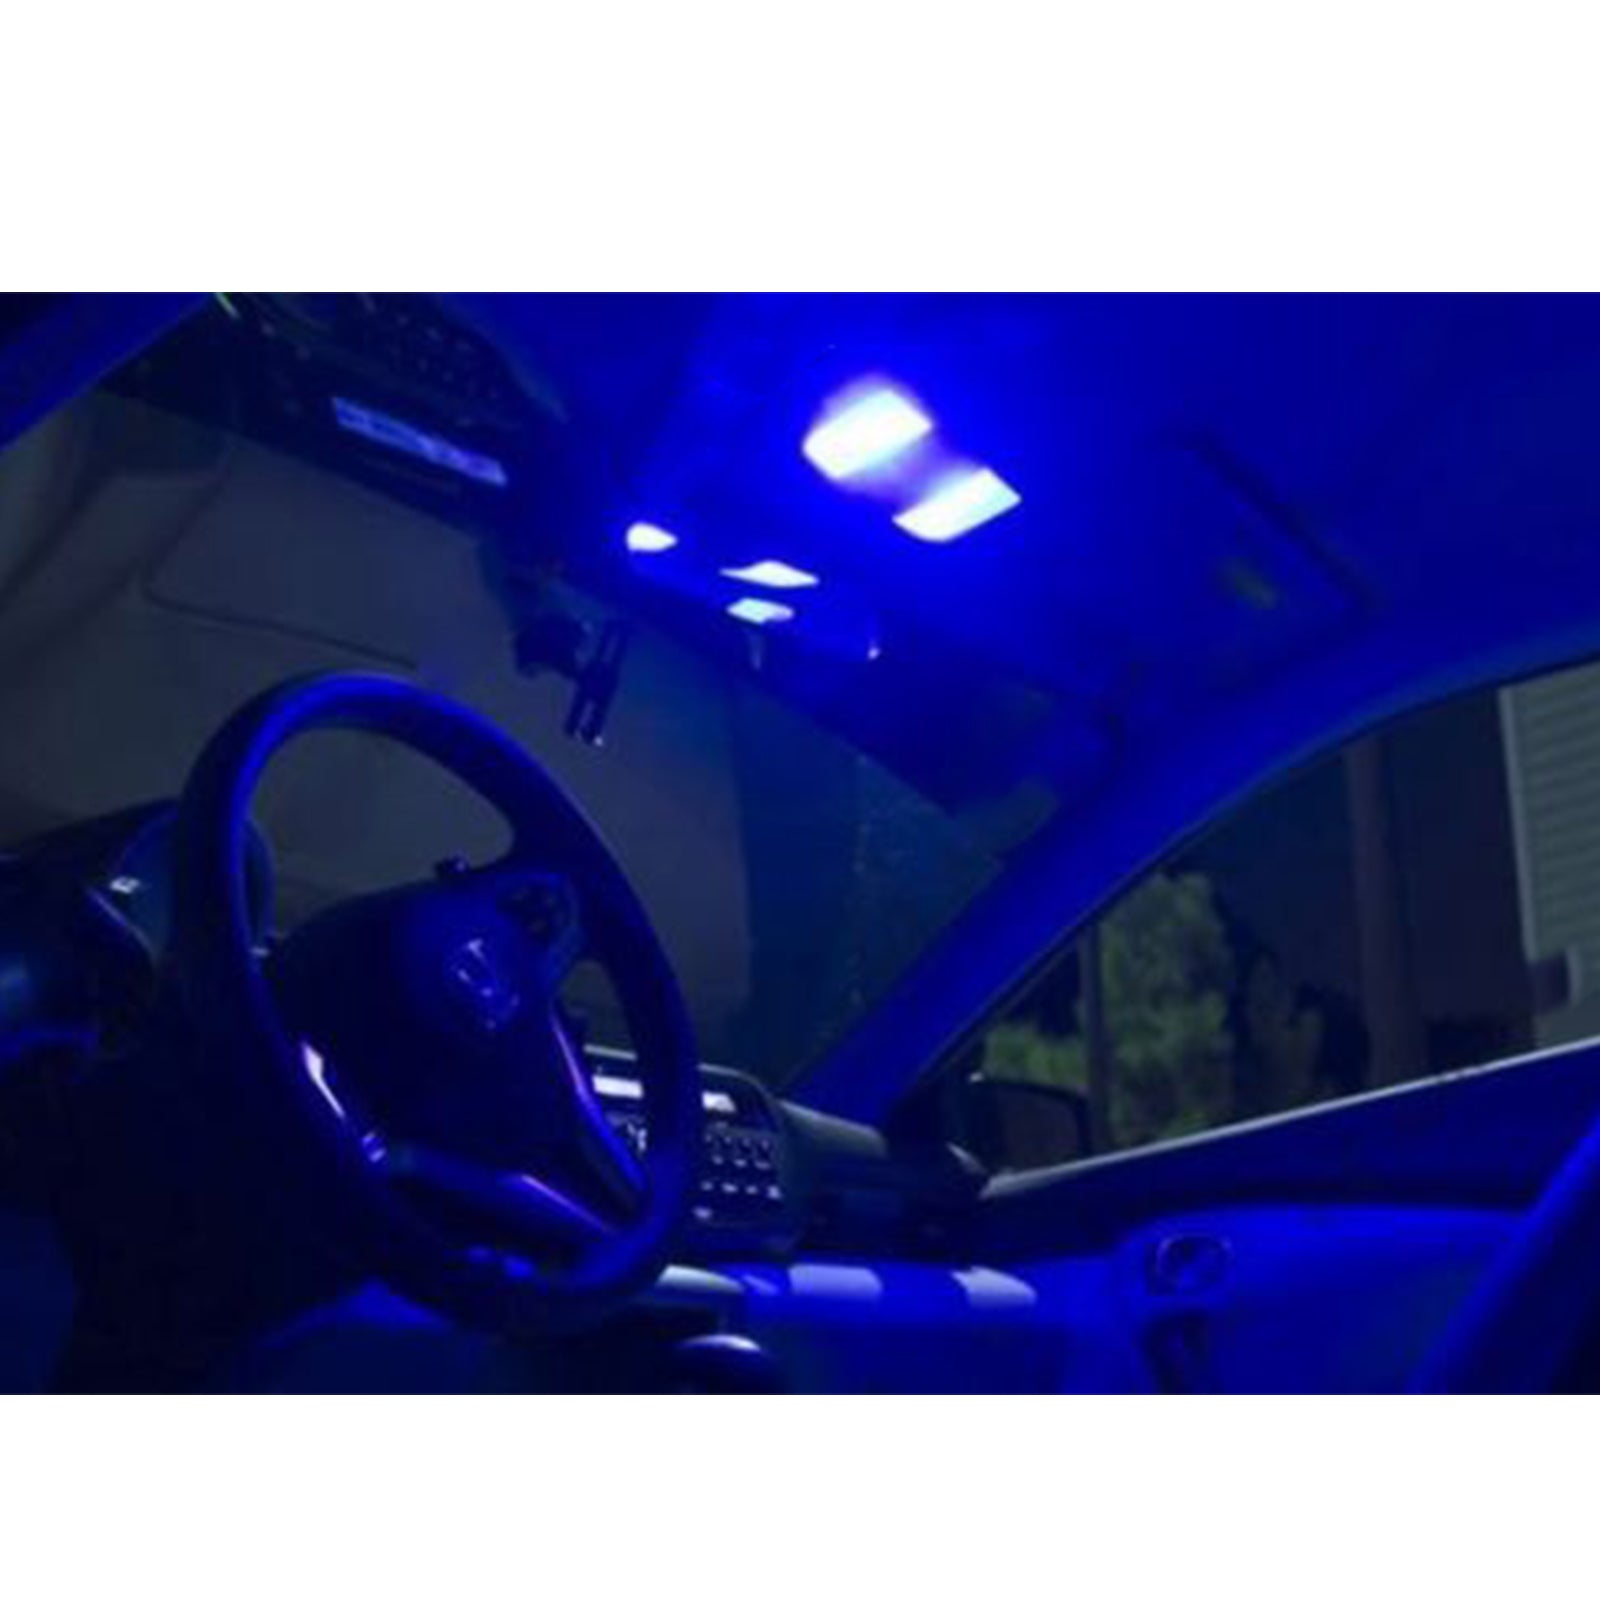 2005 2017 Ford Mustang 4 Light Led Full Interior Lights